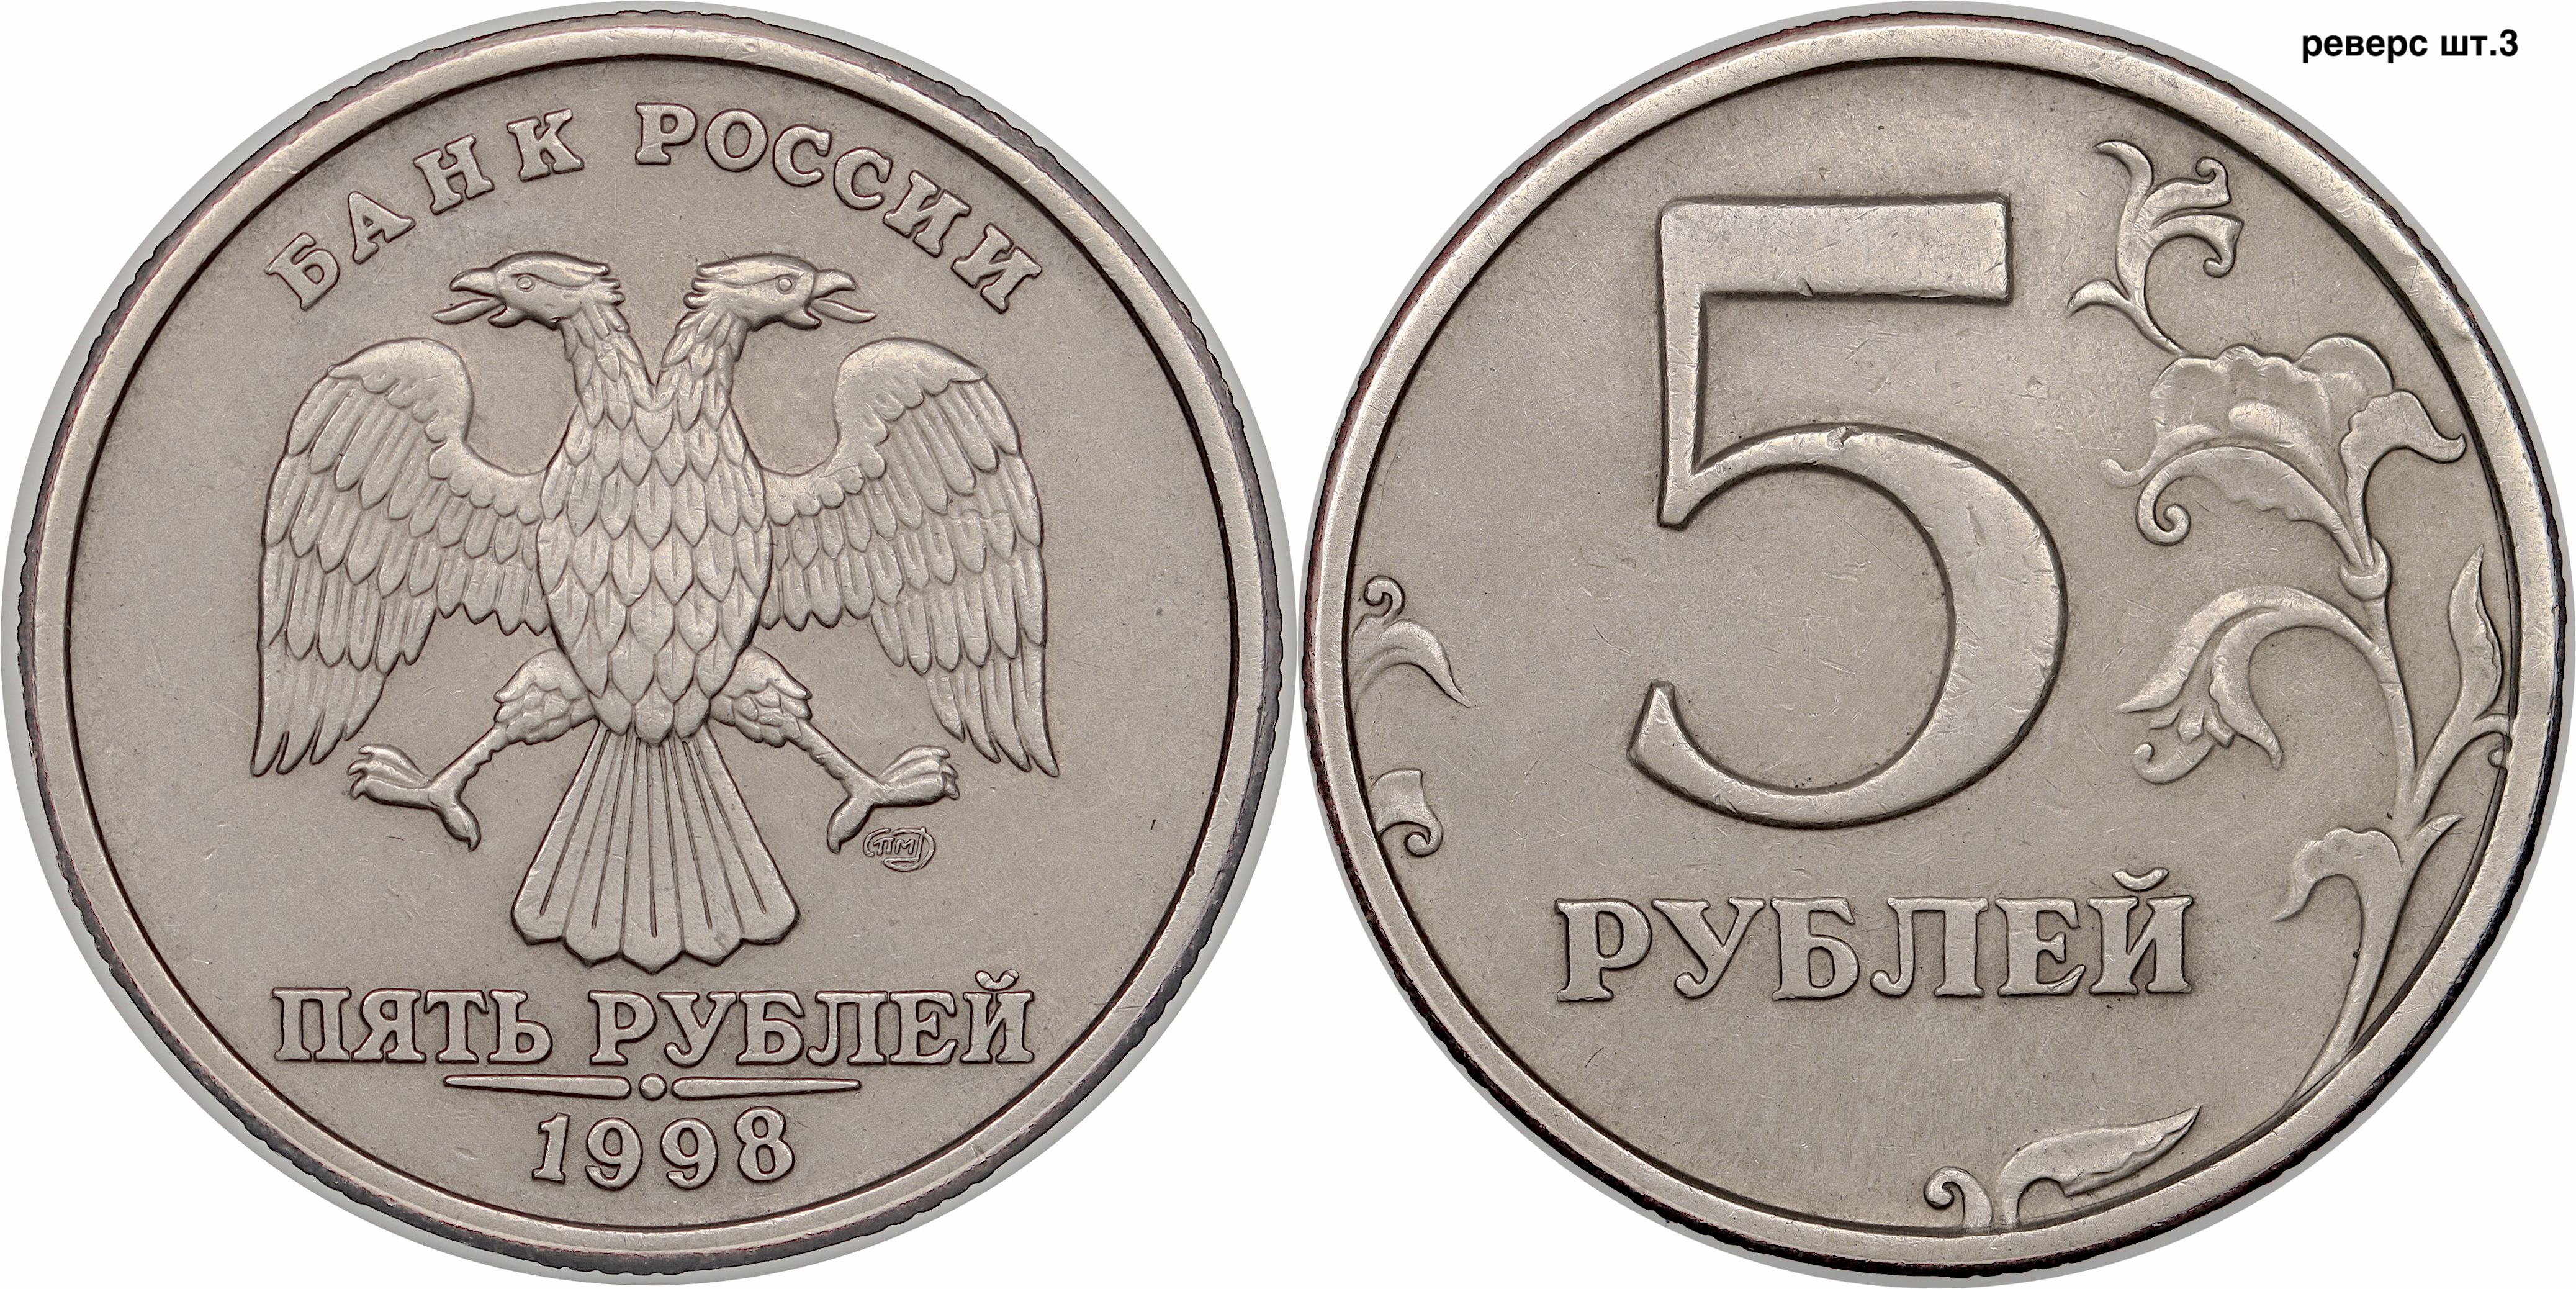 5 рублей стороны. Монета 5р 1999. Монета 5 рублей 1999. Монета 5 рублей 1999 года. Пятирублевая монета 1999 года.